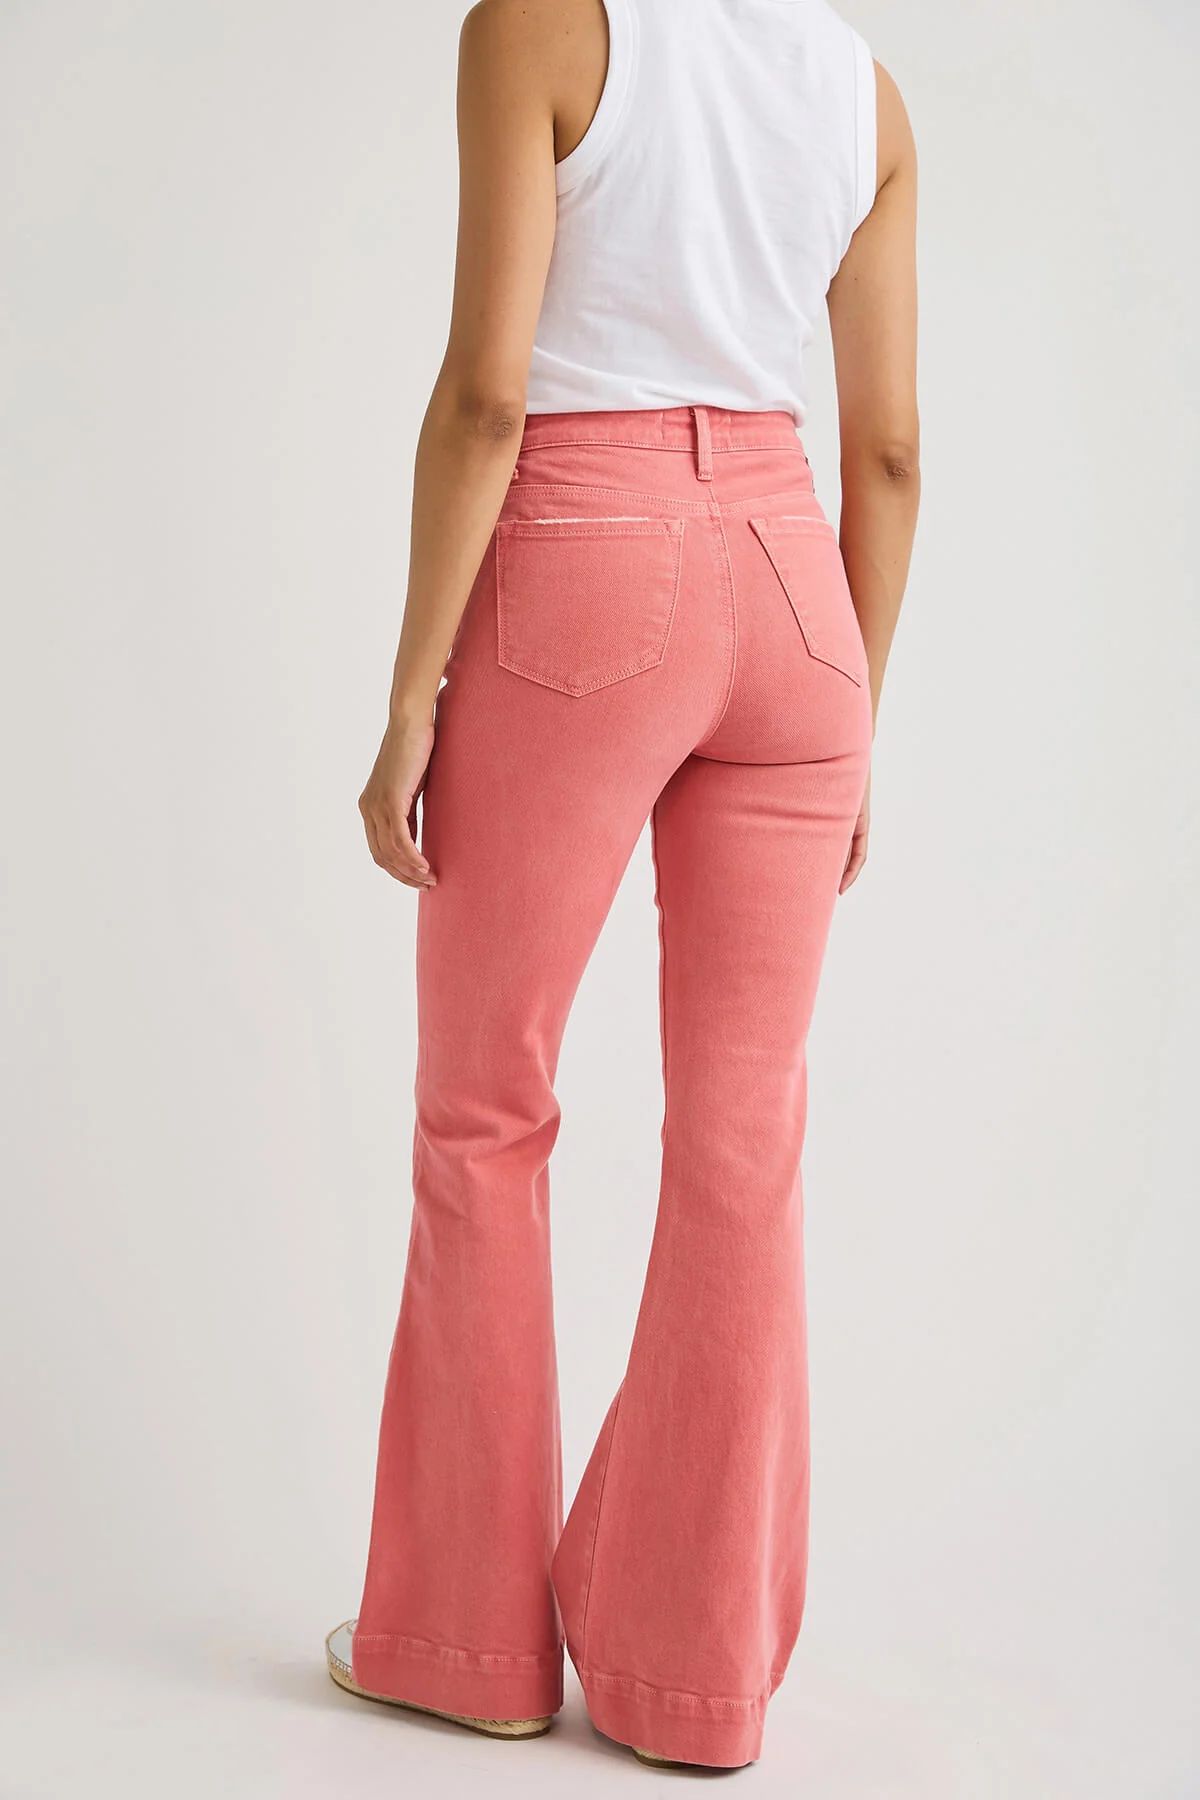 Risen Sedona Peach Blossom Patch Pocket Jeans | Social Threads